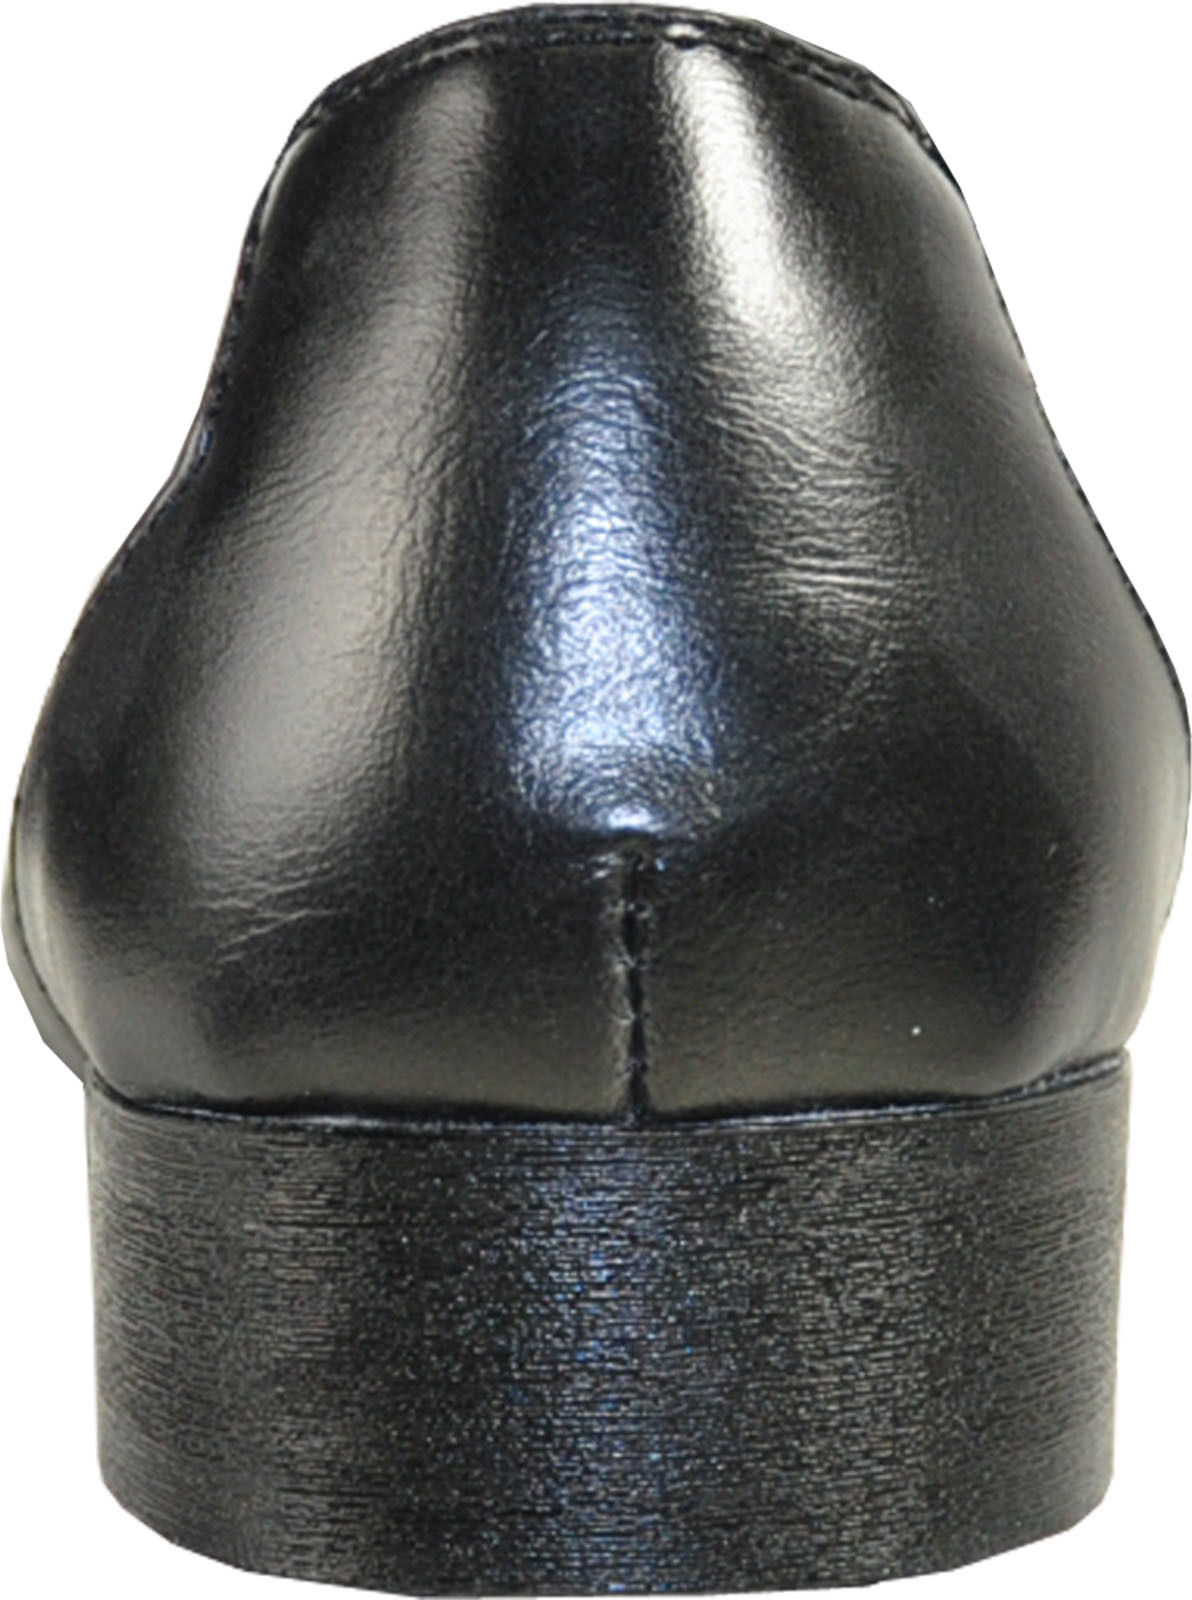 CORONADO MARINO-3 Dress Shoe Classic Point Bicycle Toe with Leather Lining Black (9 D(M) US) - image 3 of 7